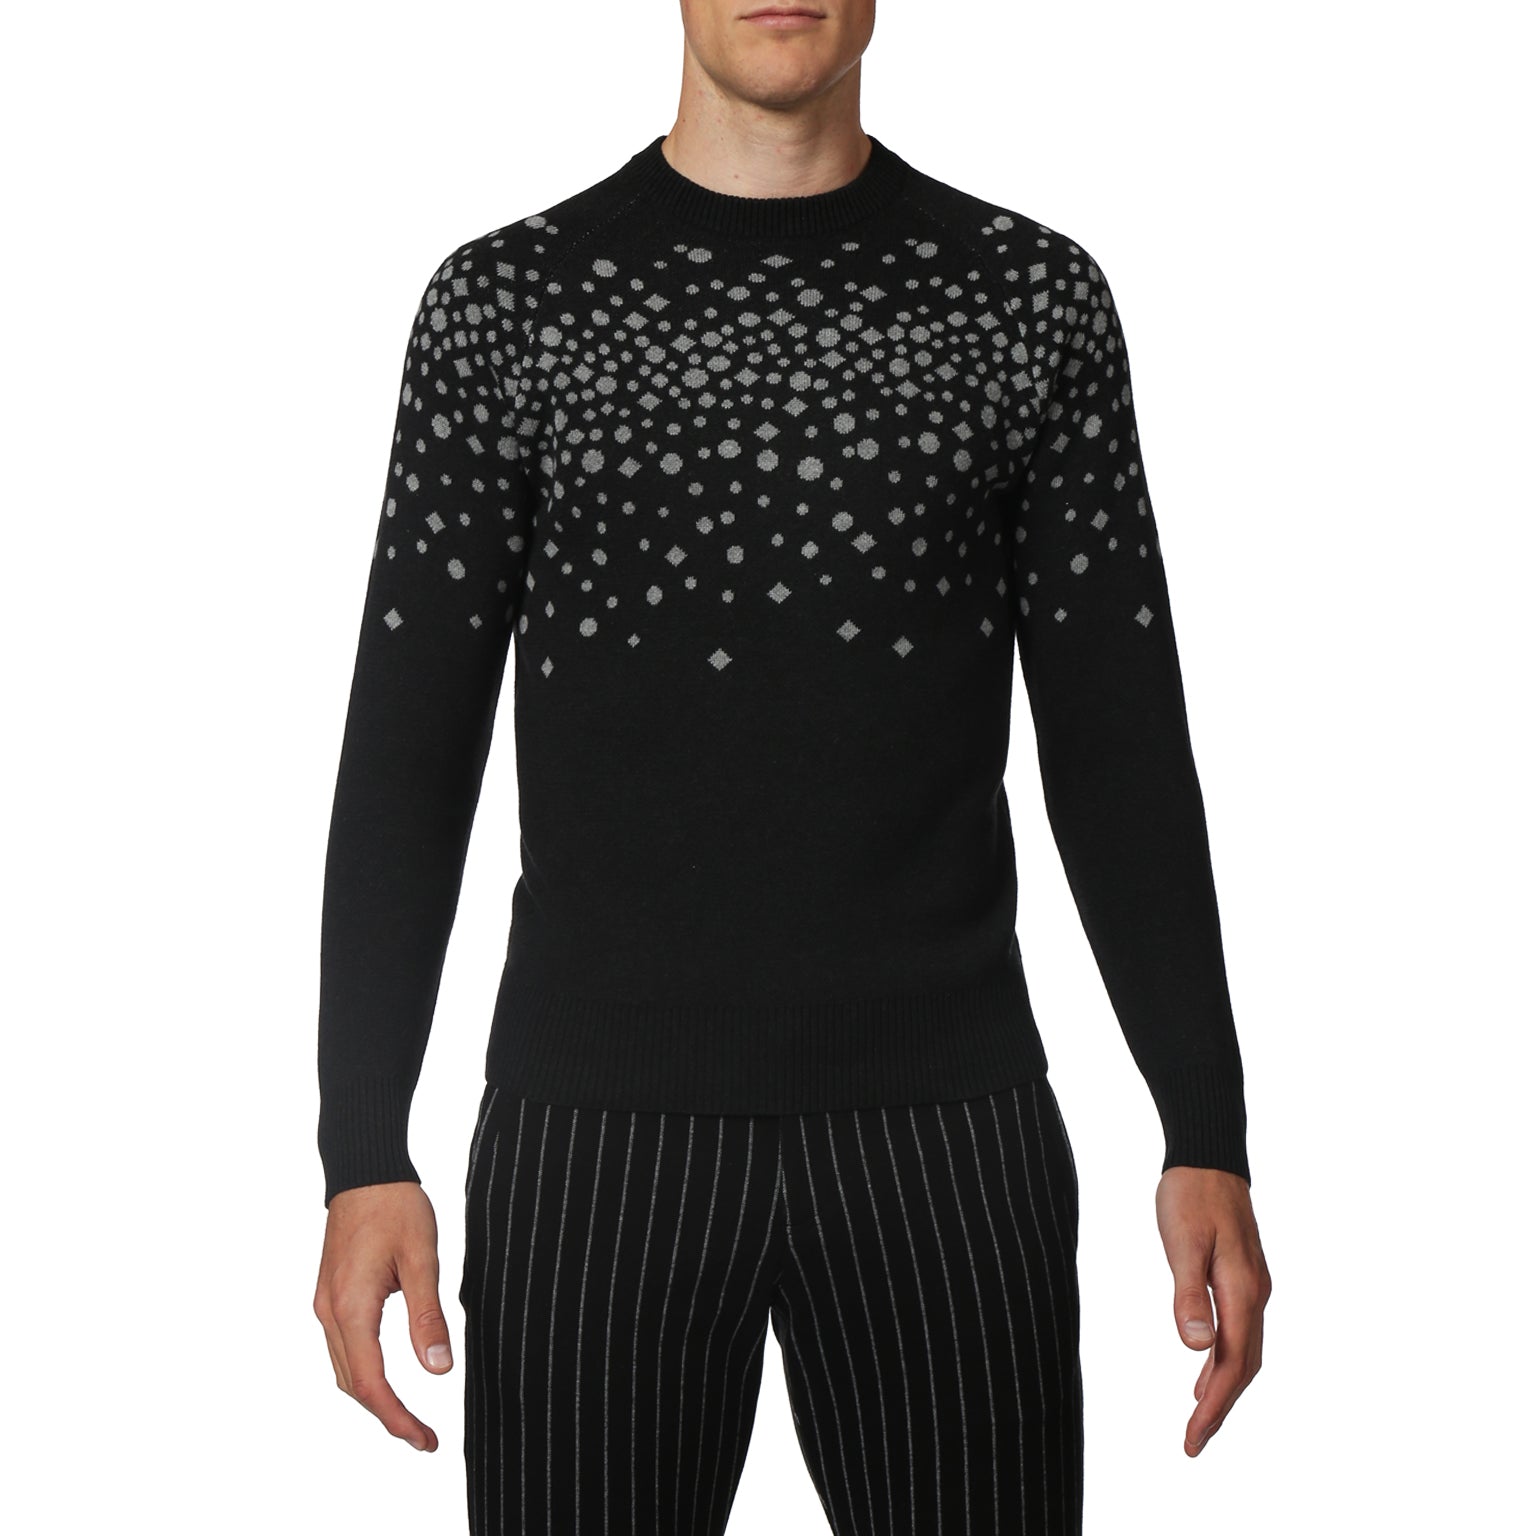 NEW- Space Black Starlight Sweater